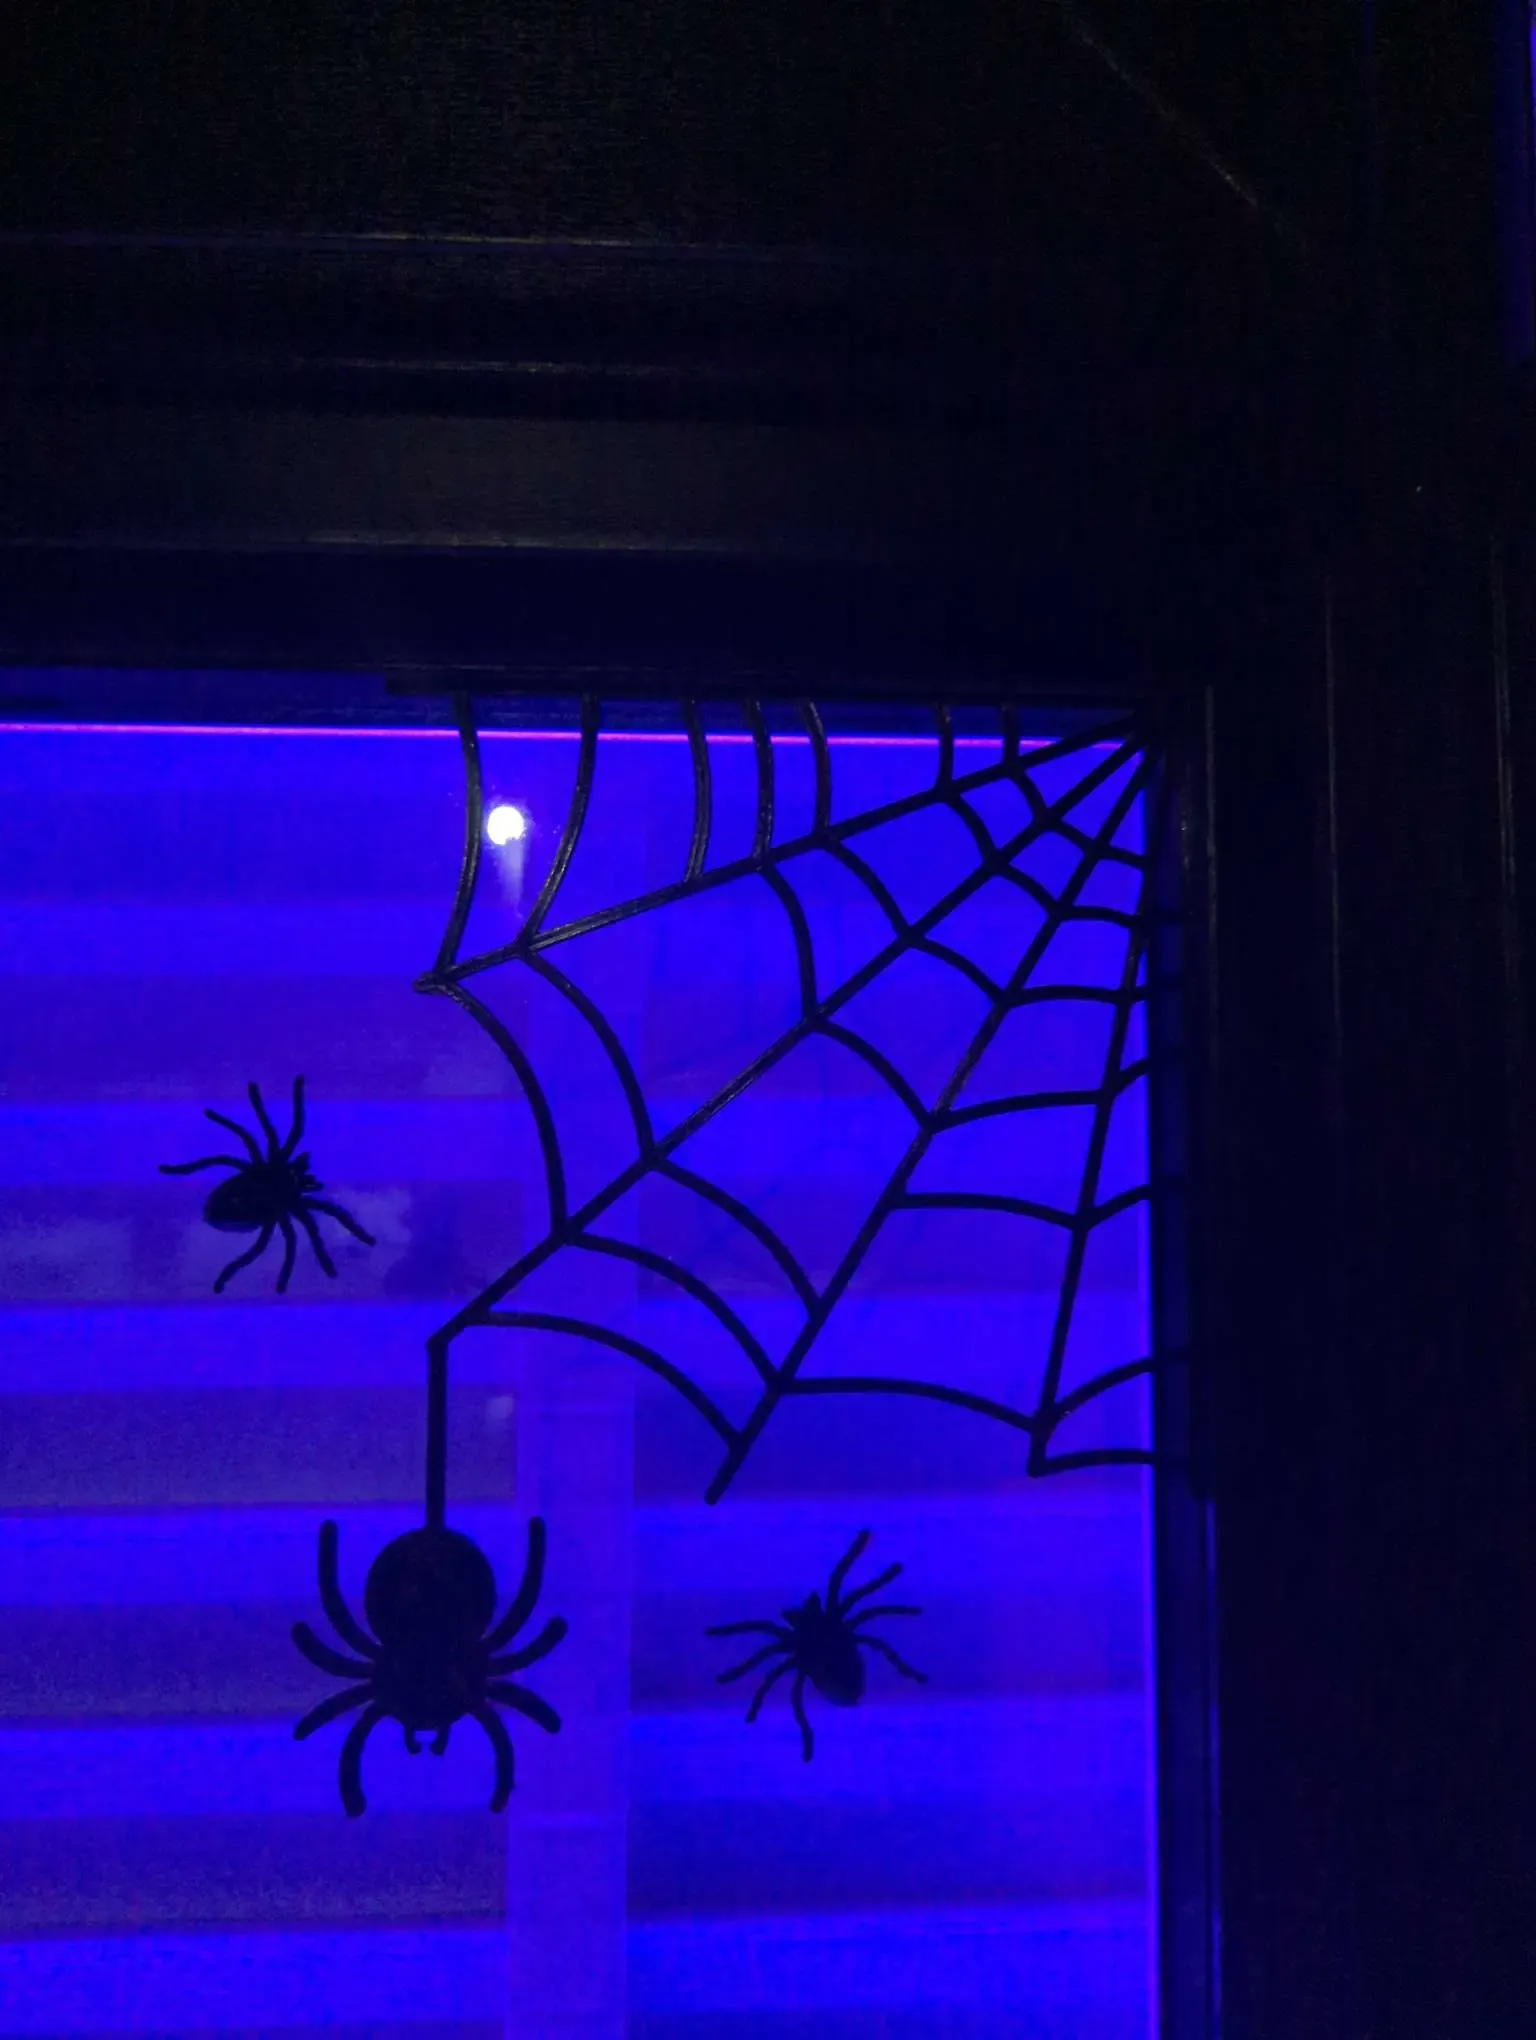 Corner web with spider